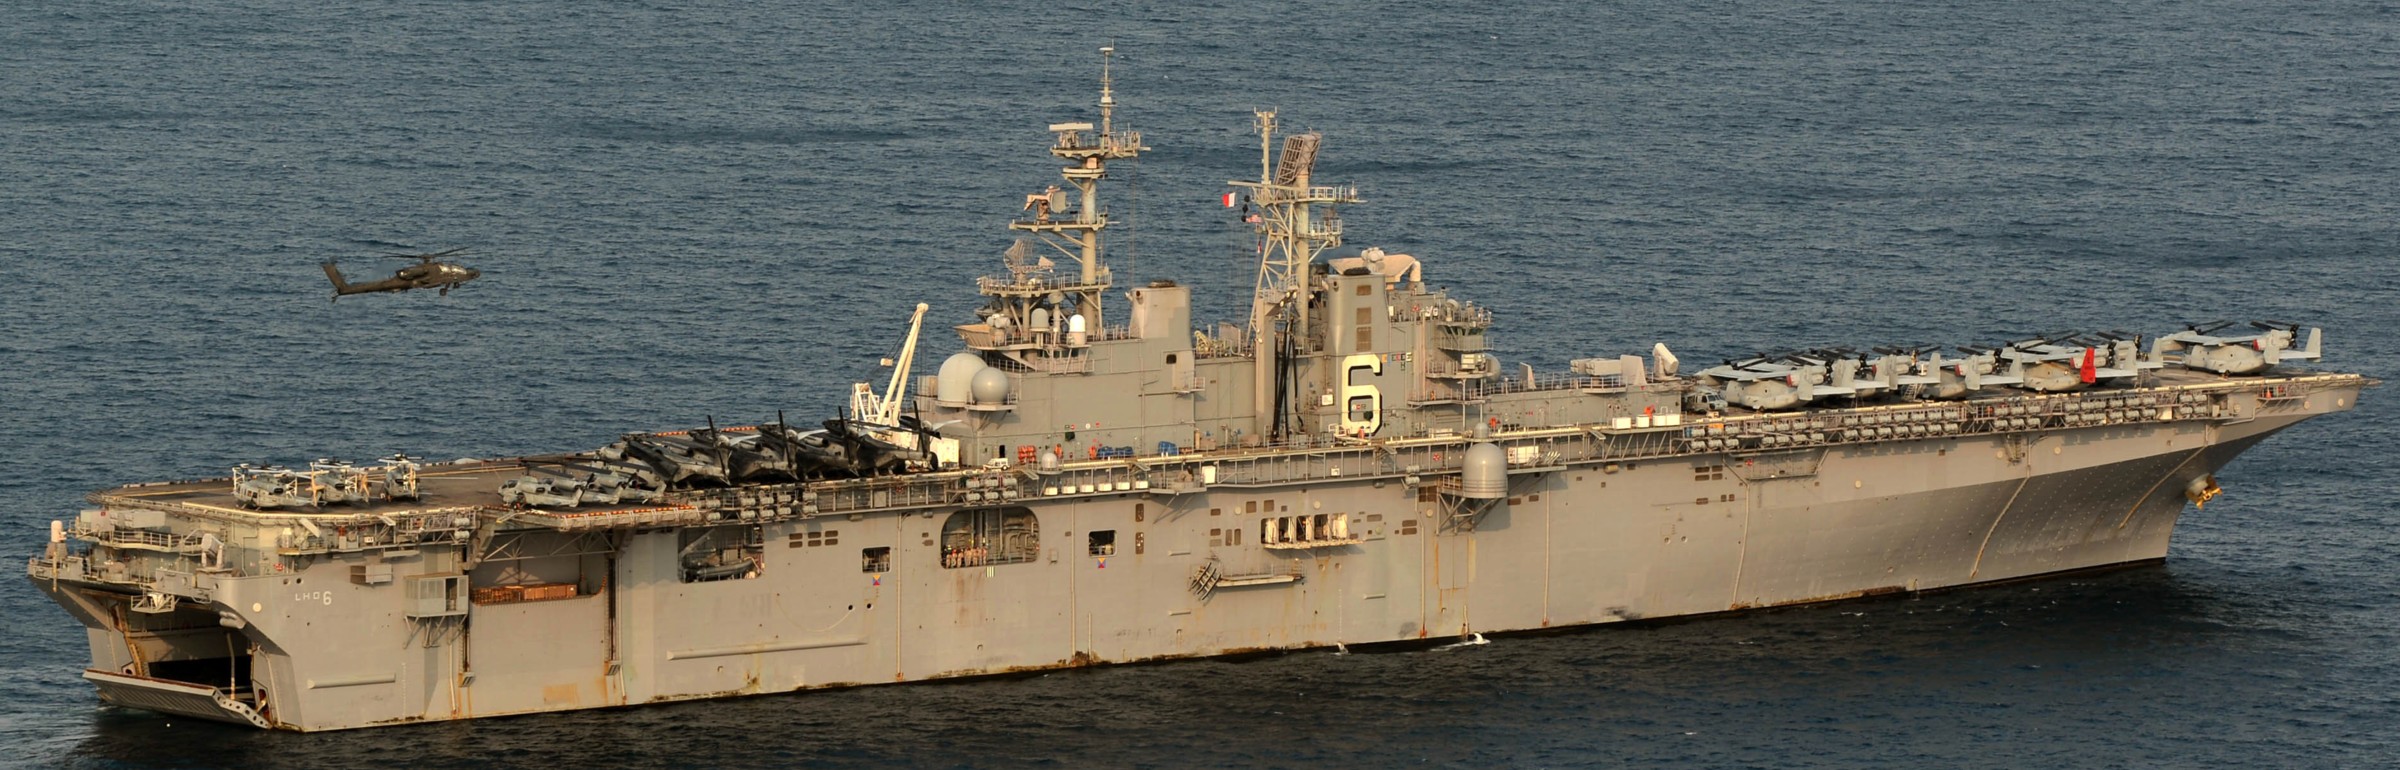 lhd-6 uss bonhomme richard amphibious assault ship landing helicopter dock wasp class us navy army ah-64 apache 262